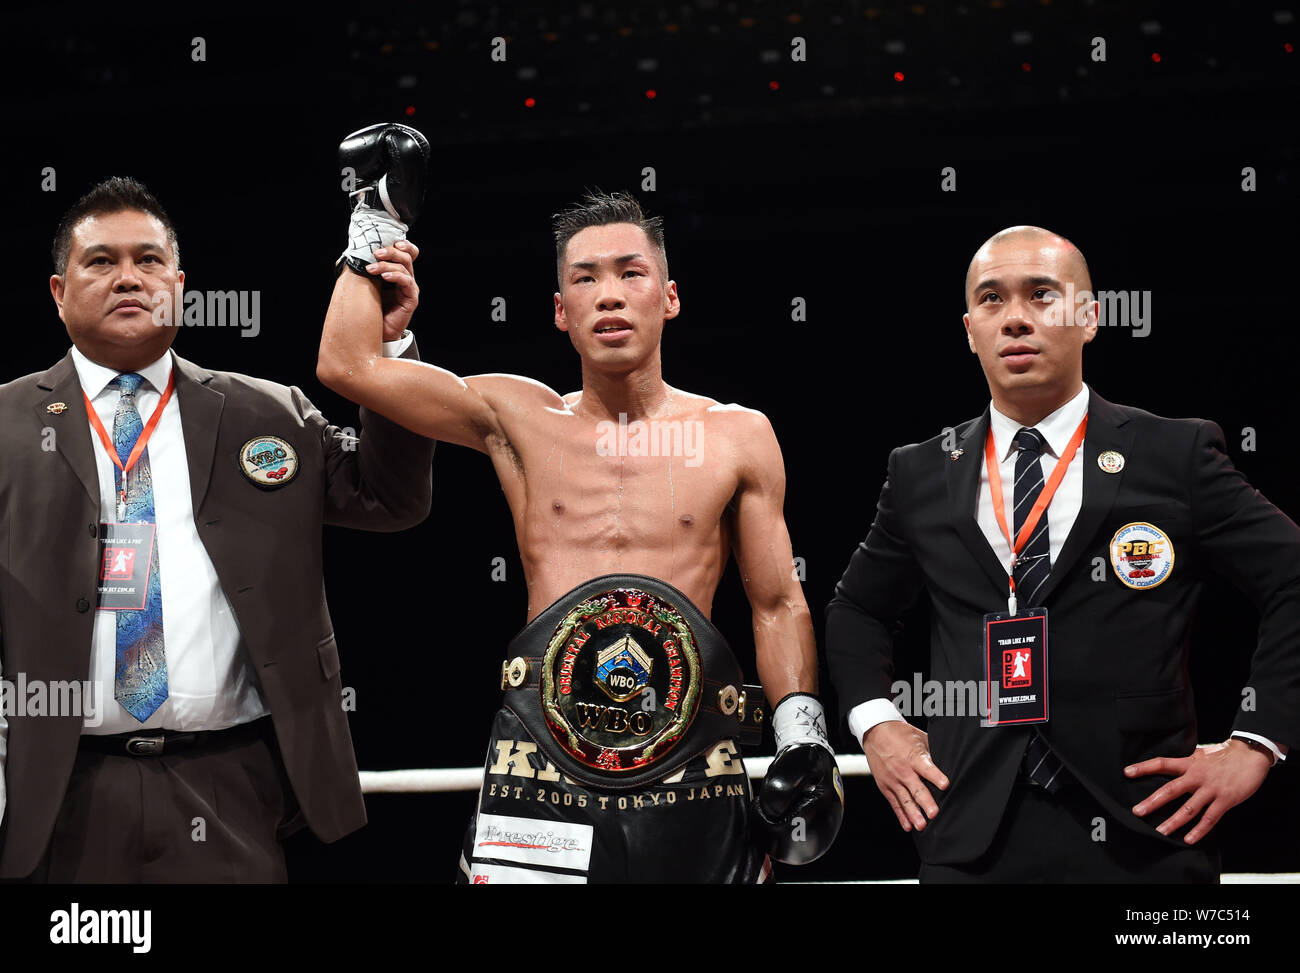 Takuya Watanabe, center, of Japan, celebrates after winning the WBO super featherweight  intercontinental title bout against Li Leshan of China during Stock Photo